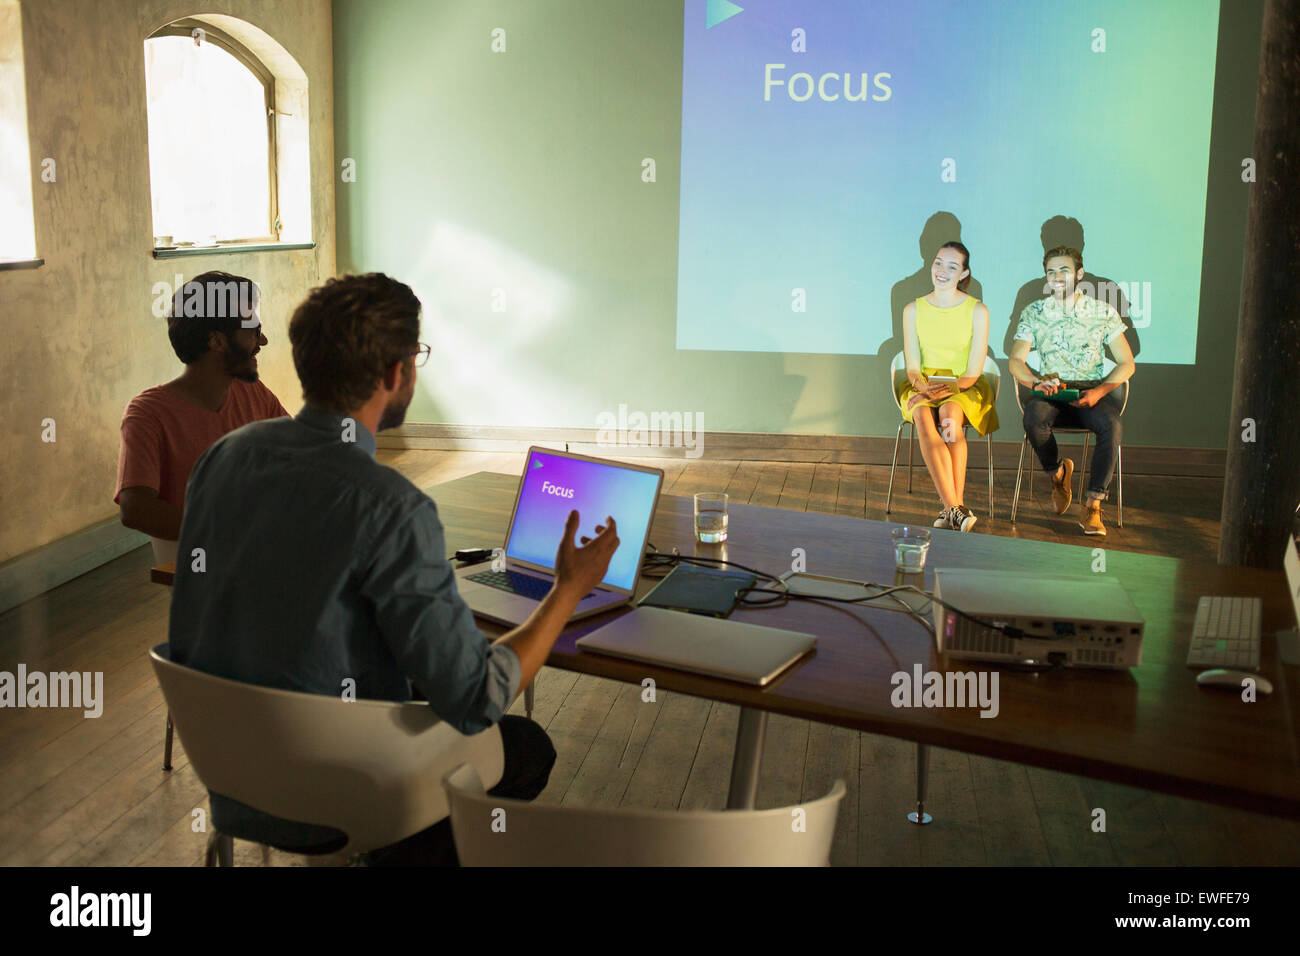 Business people preparing audio visual presentation on Focus Stock Photo